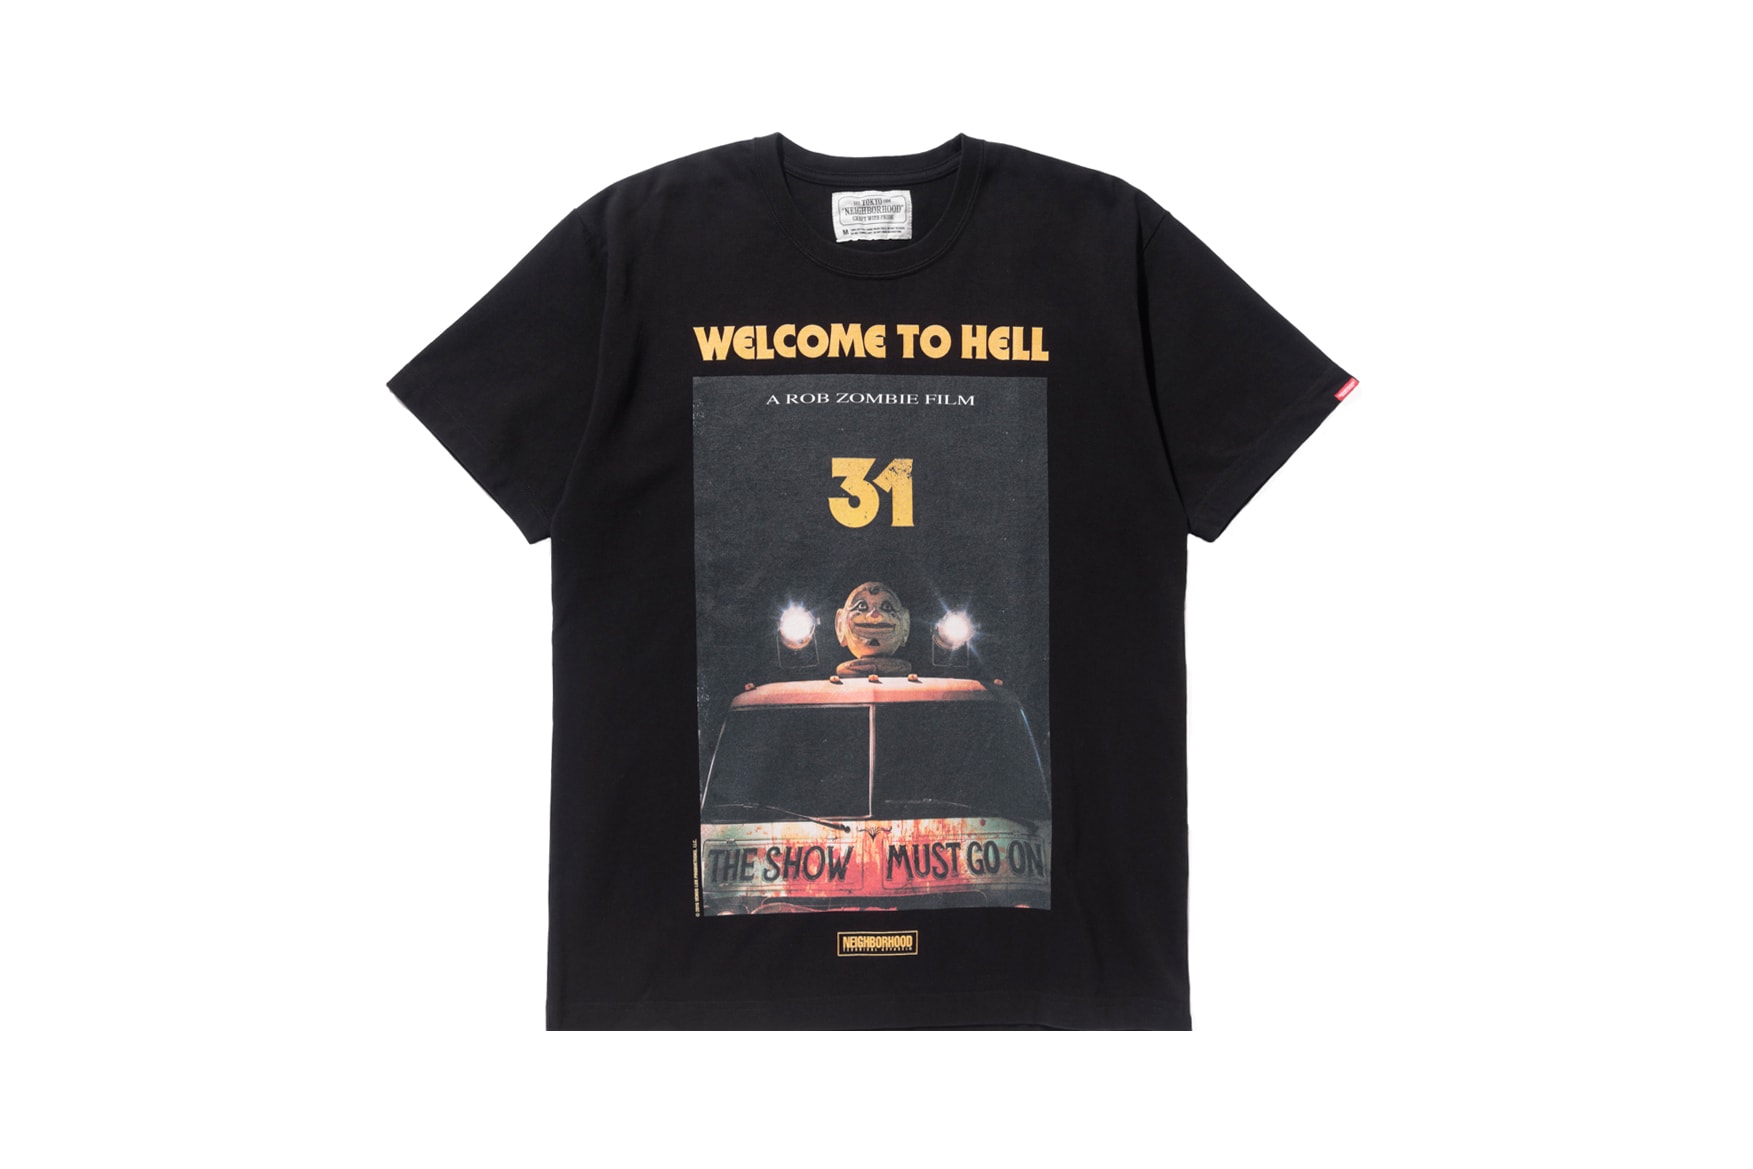 Rob Zombie x NEIGHBORHOOD "WELCOME TO HELL" T-Shirt Capsule